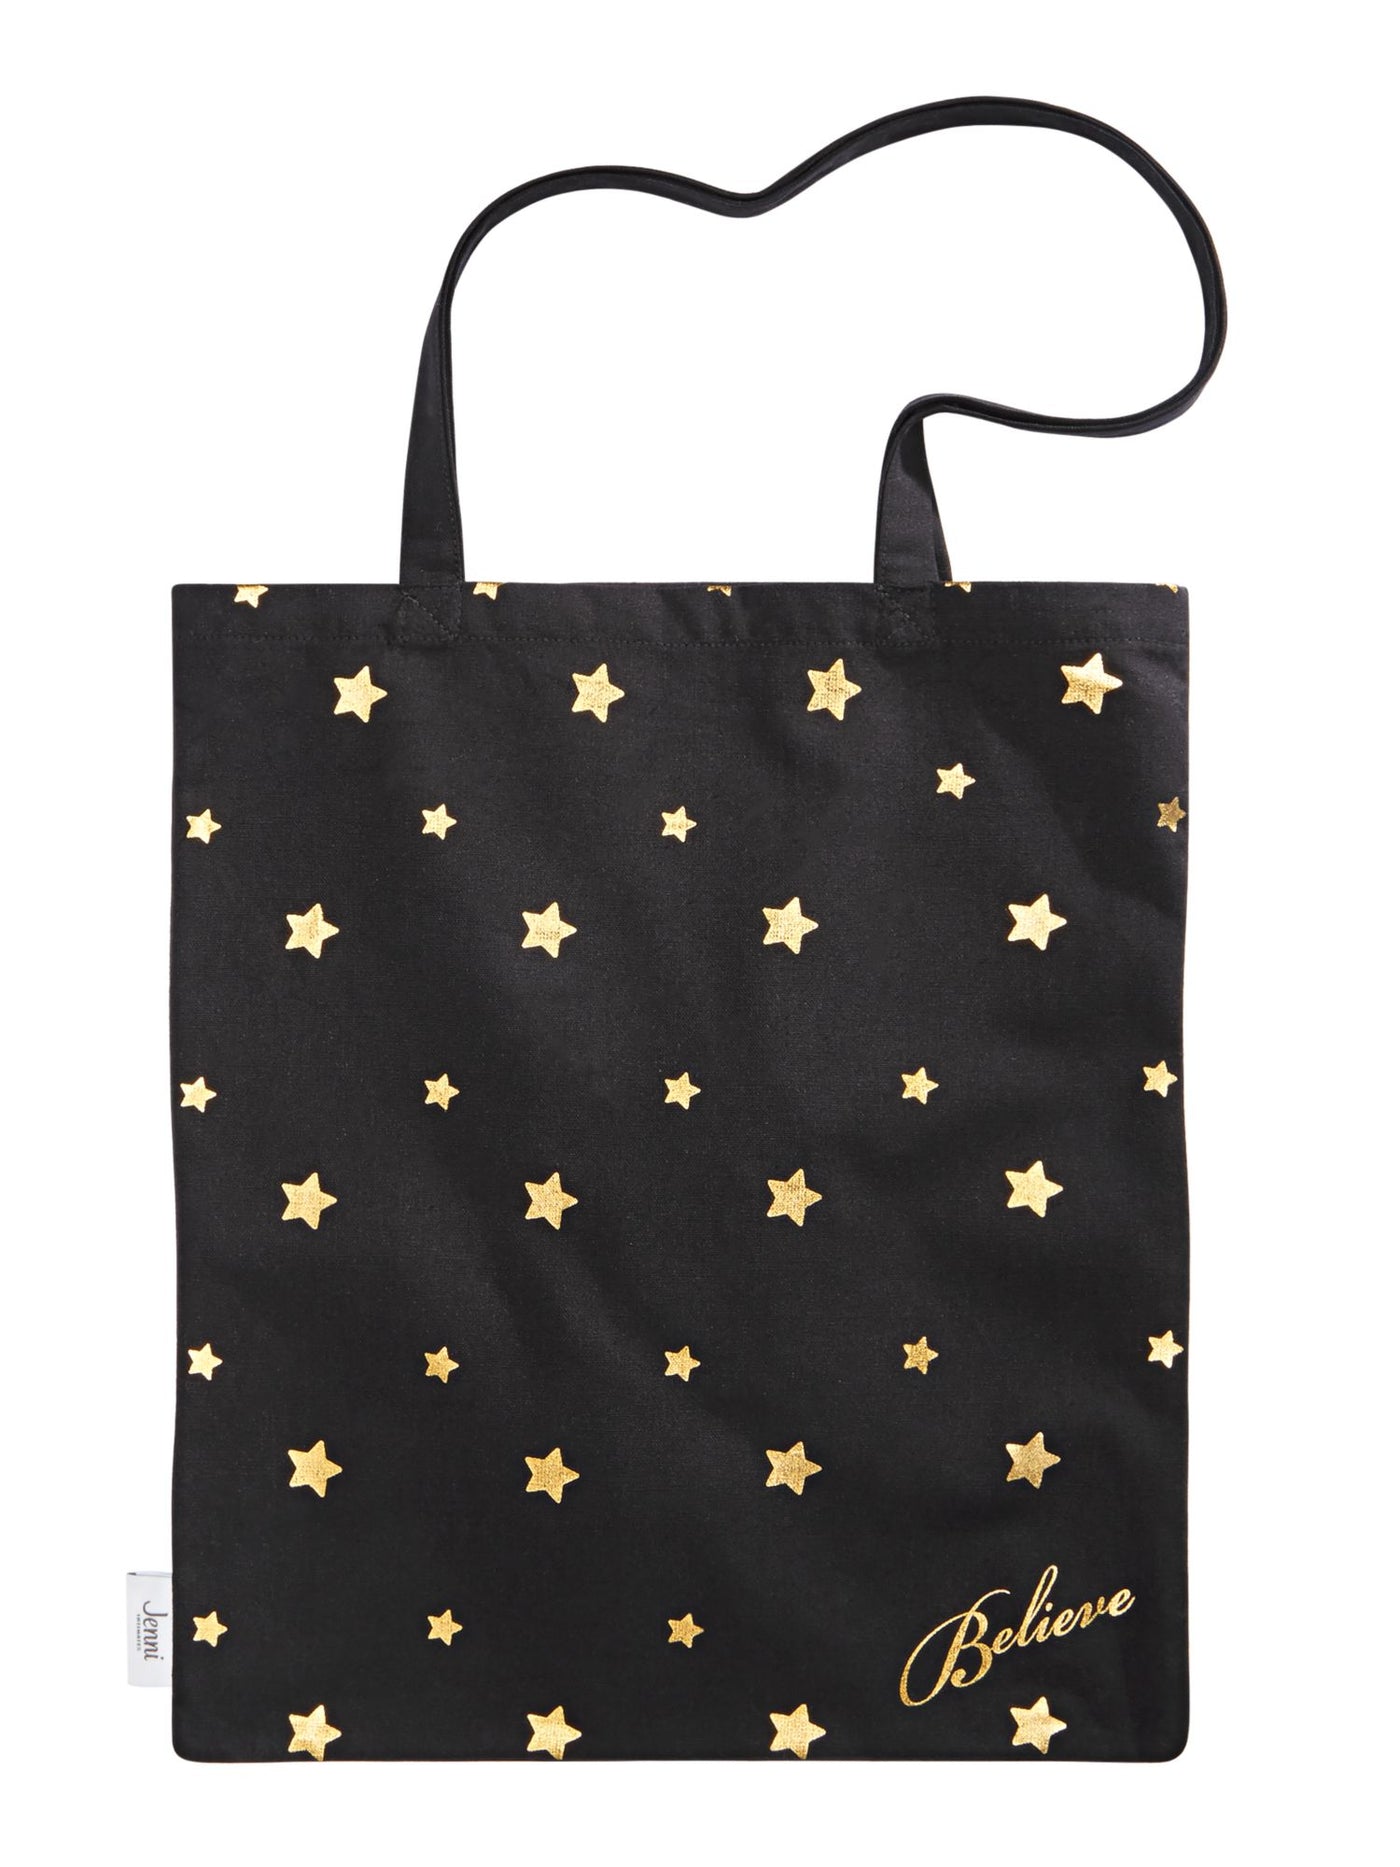 JENNI Women's Black Printed Polyester Gold Star Double Flat Strap Tote Handbag Purse